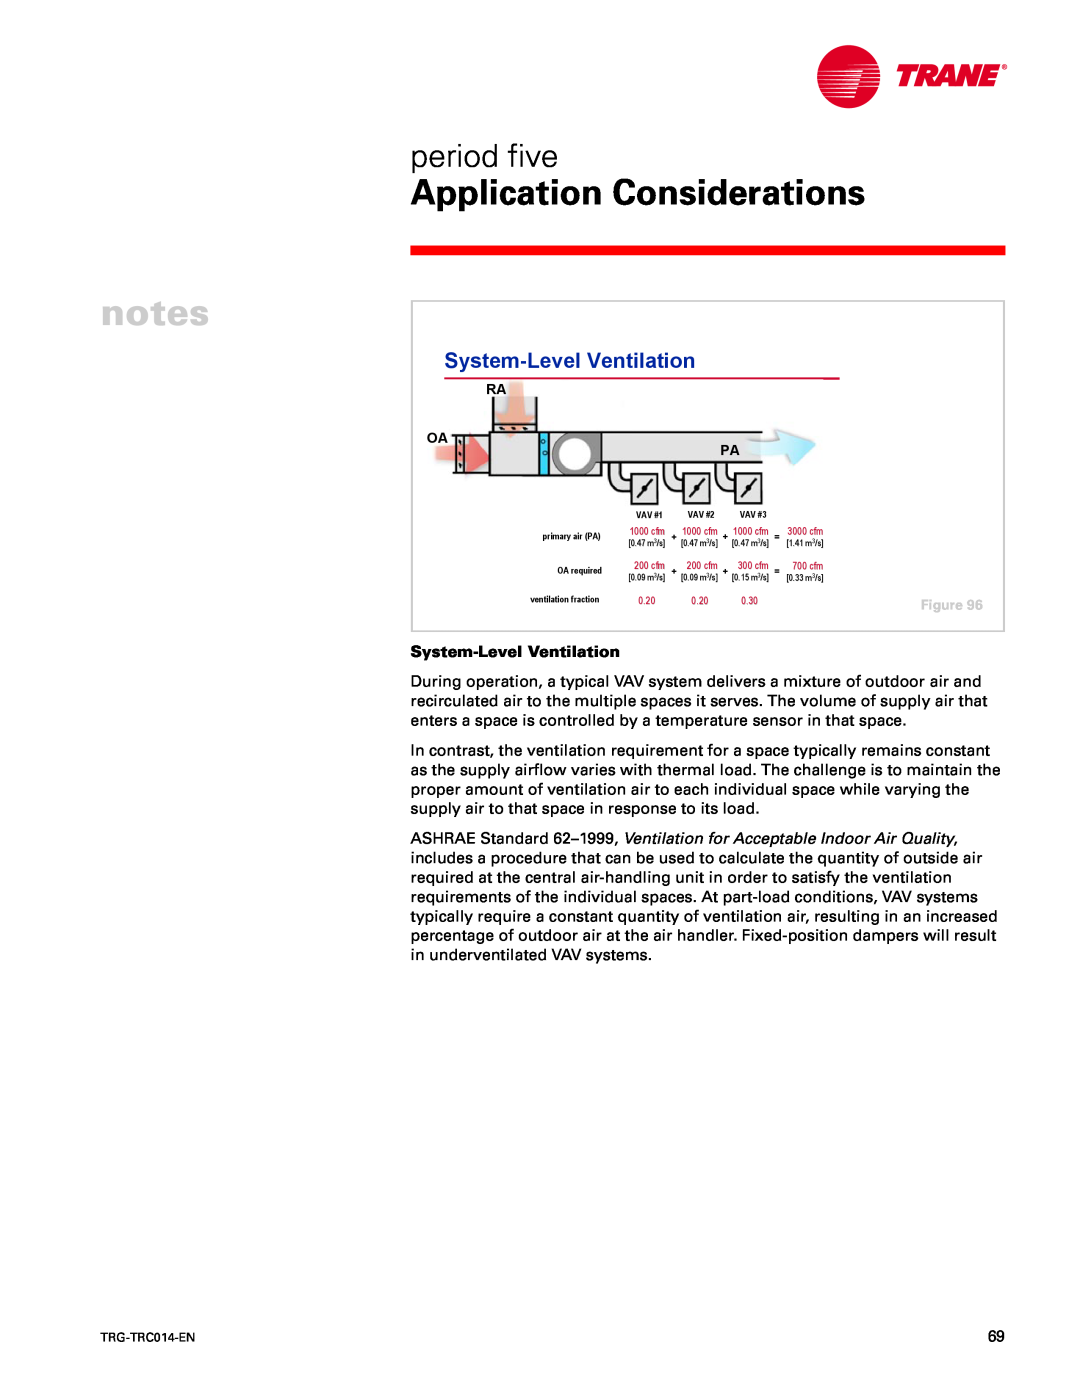 Trane TRG-TRC014-EN manual period five, System-LevelVentilation, Application Considerations 